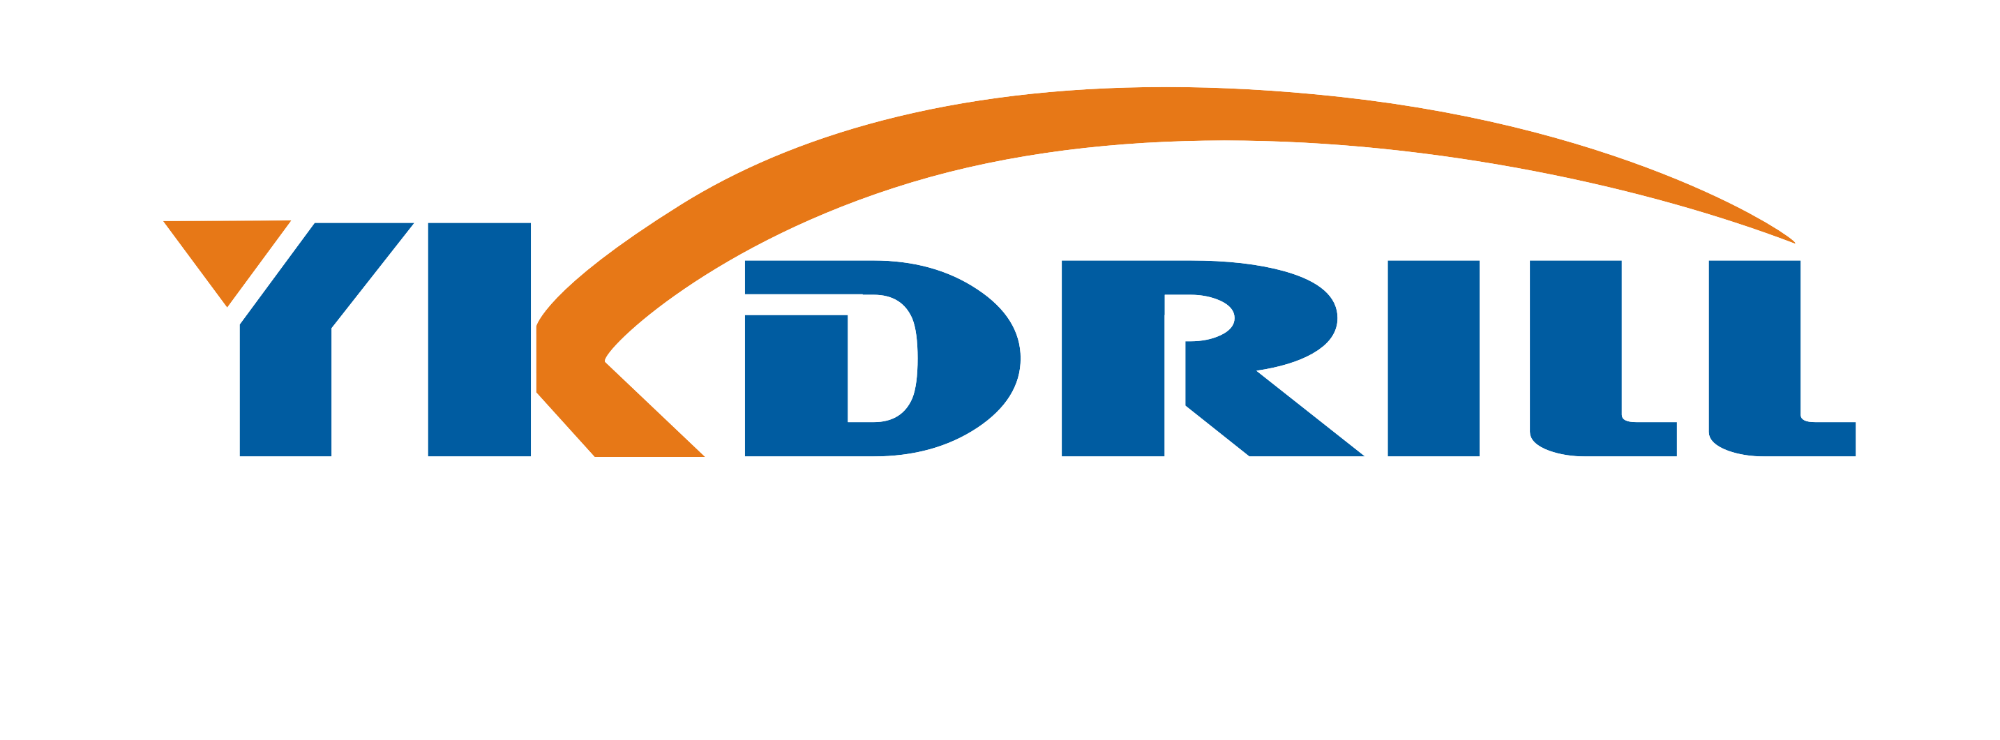 Shandong Yikuang Drilling Technology Co.,Ltd.